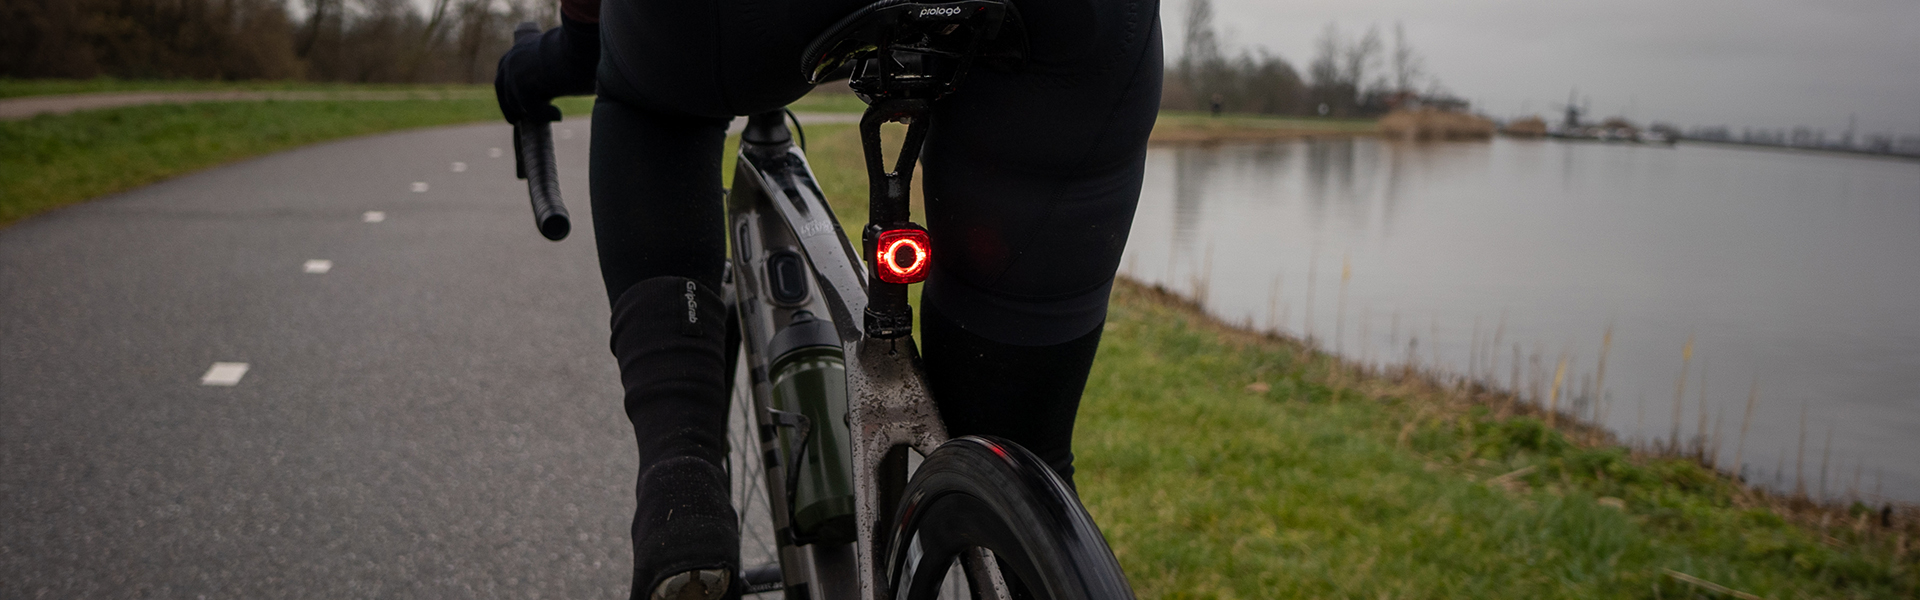 Sate-lite 60 LUX USB rechargeable bike light StVZO eletric bike front light CREE LED waterproof